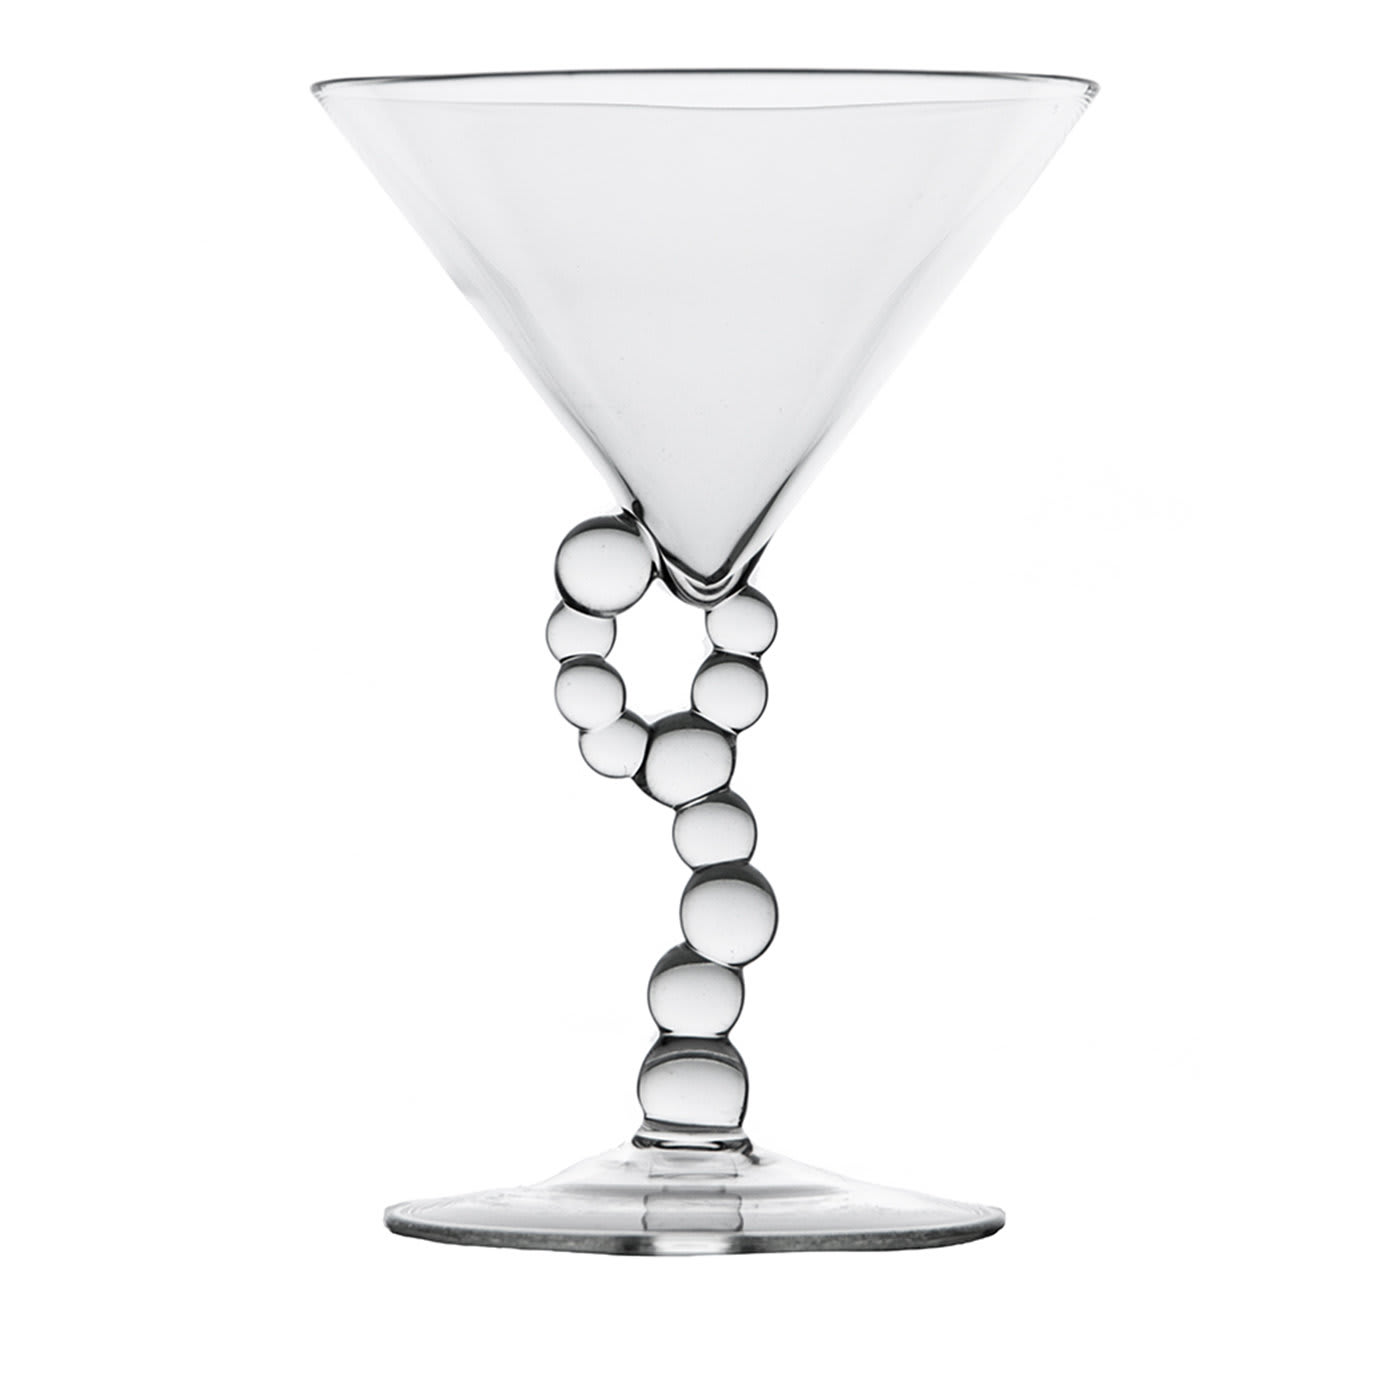 Alchemica Martini Glass - Simone Crestani